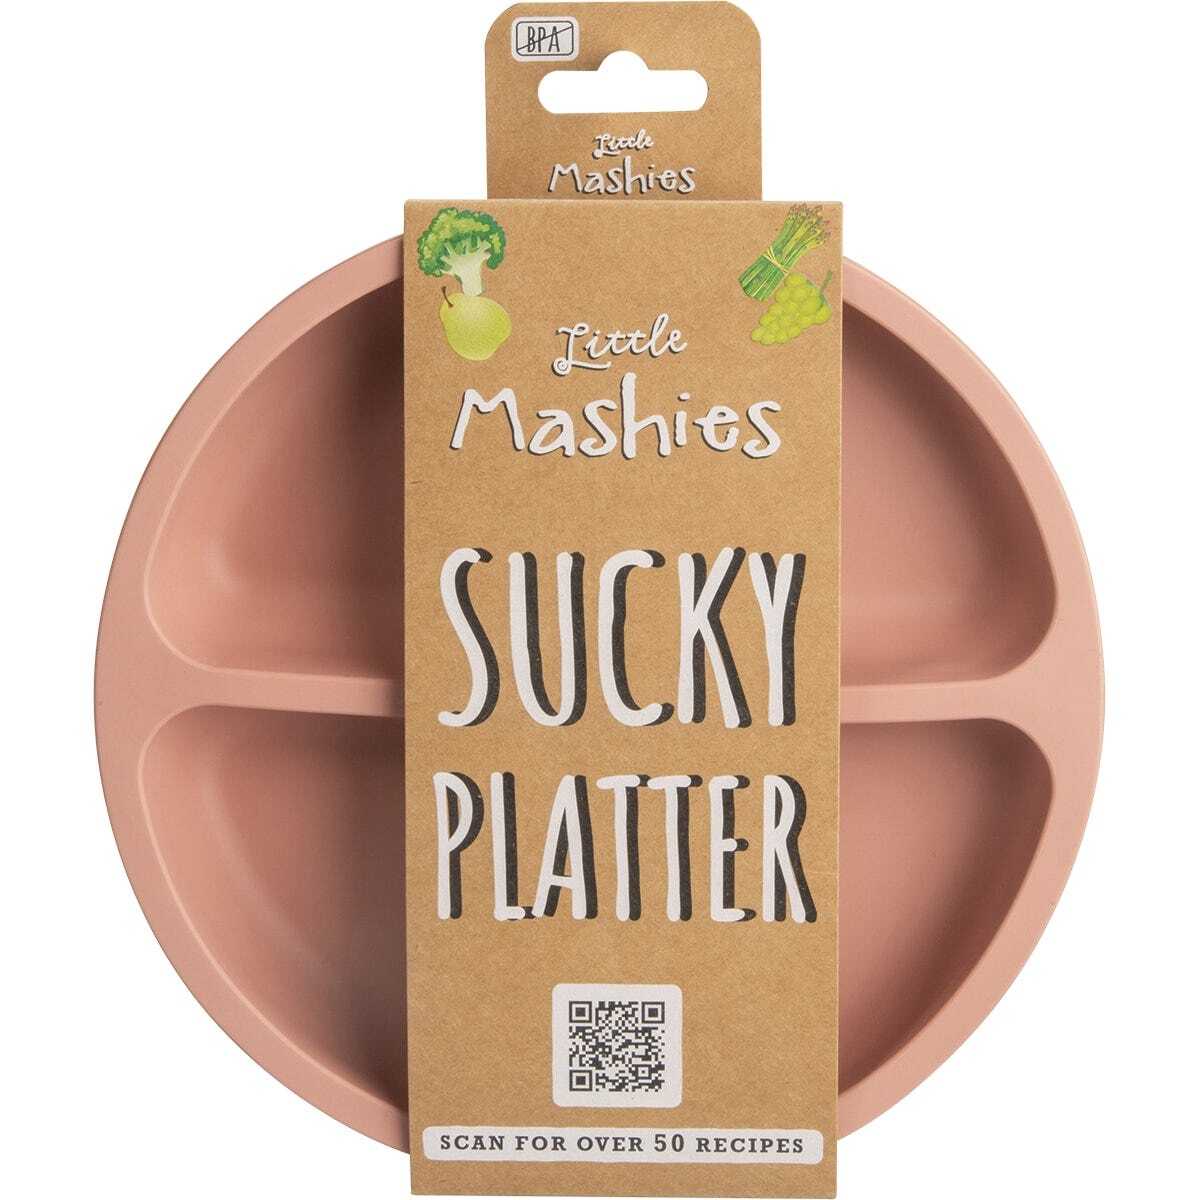 Silicone Sucky Platter - Blush Pink